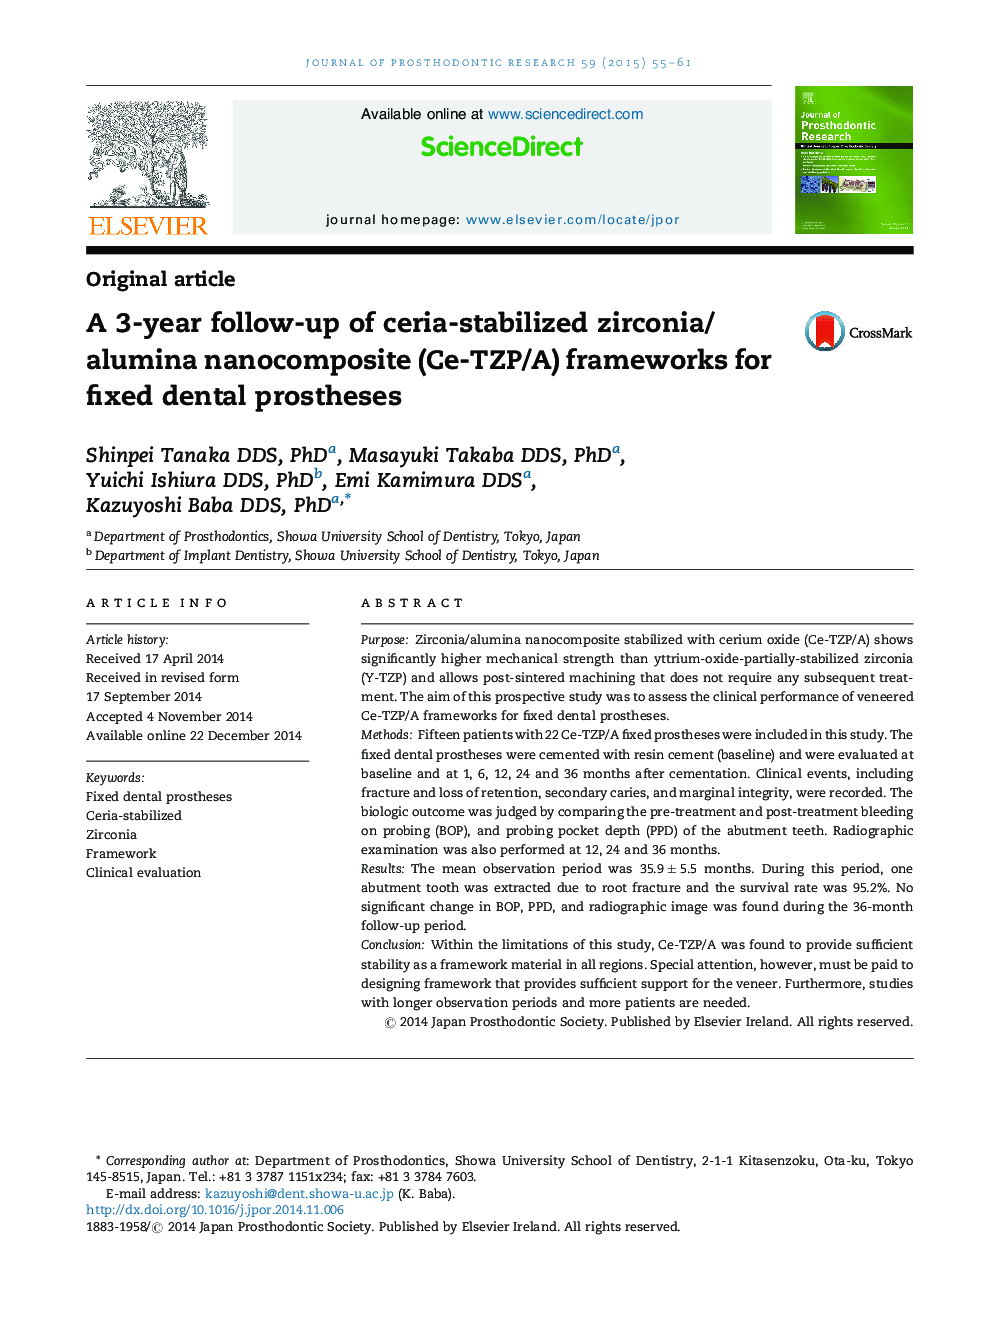 A 3-year follow-up of ceria-stabilized zirconia/alumina nanocomposite (Ce-TZP/A) frameworks for fixed dental prostheses